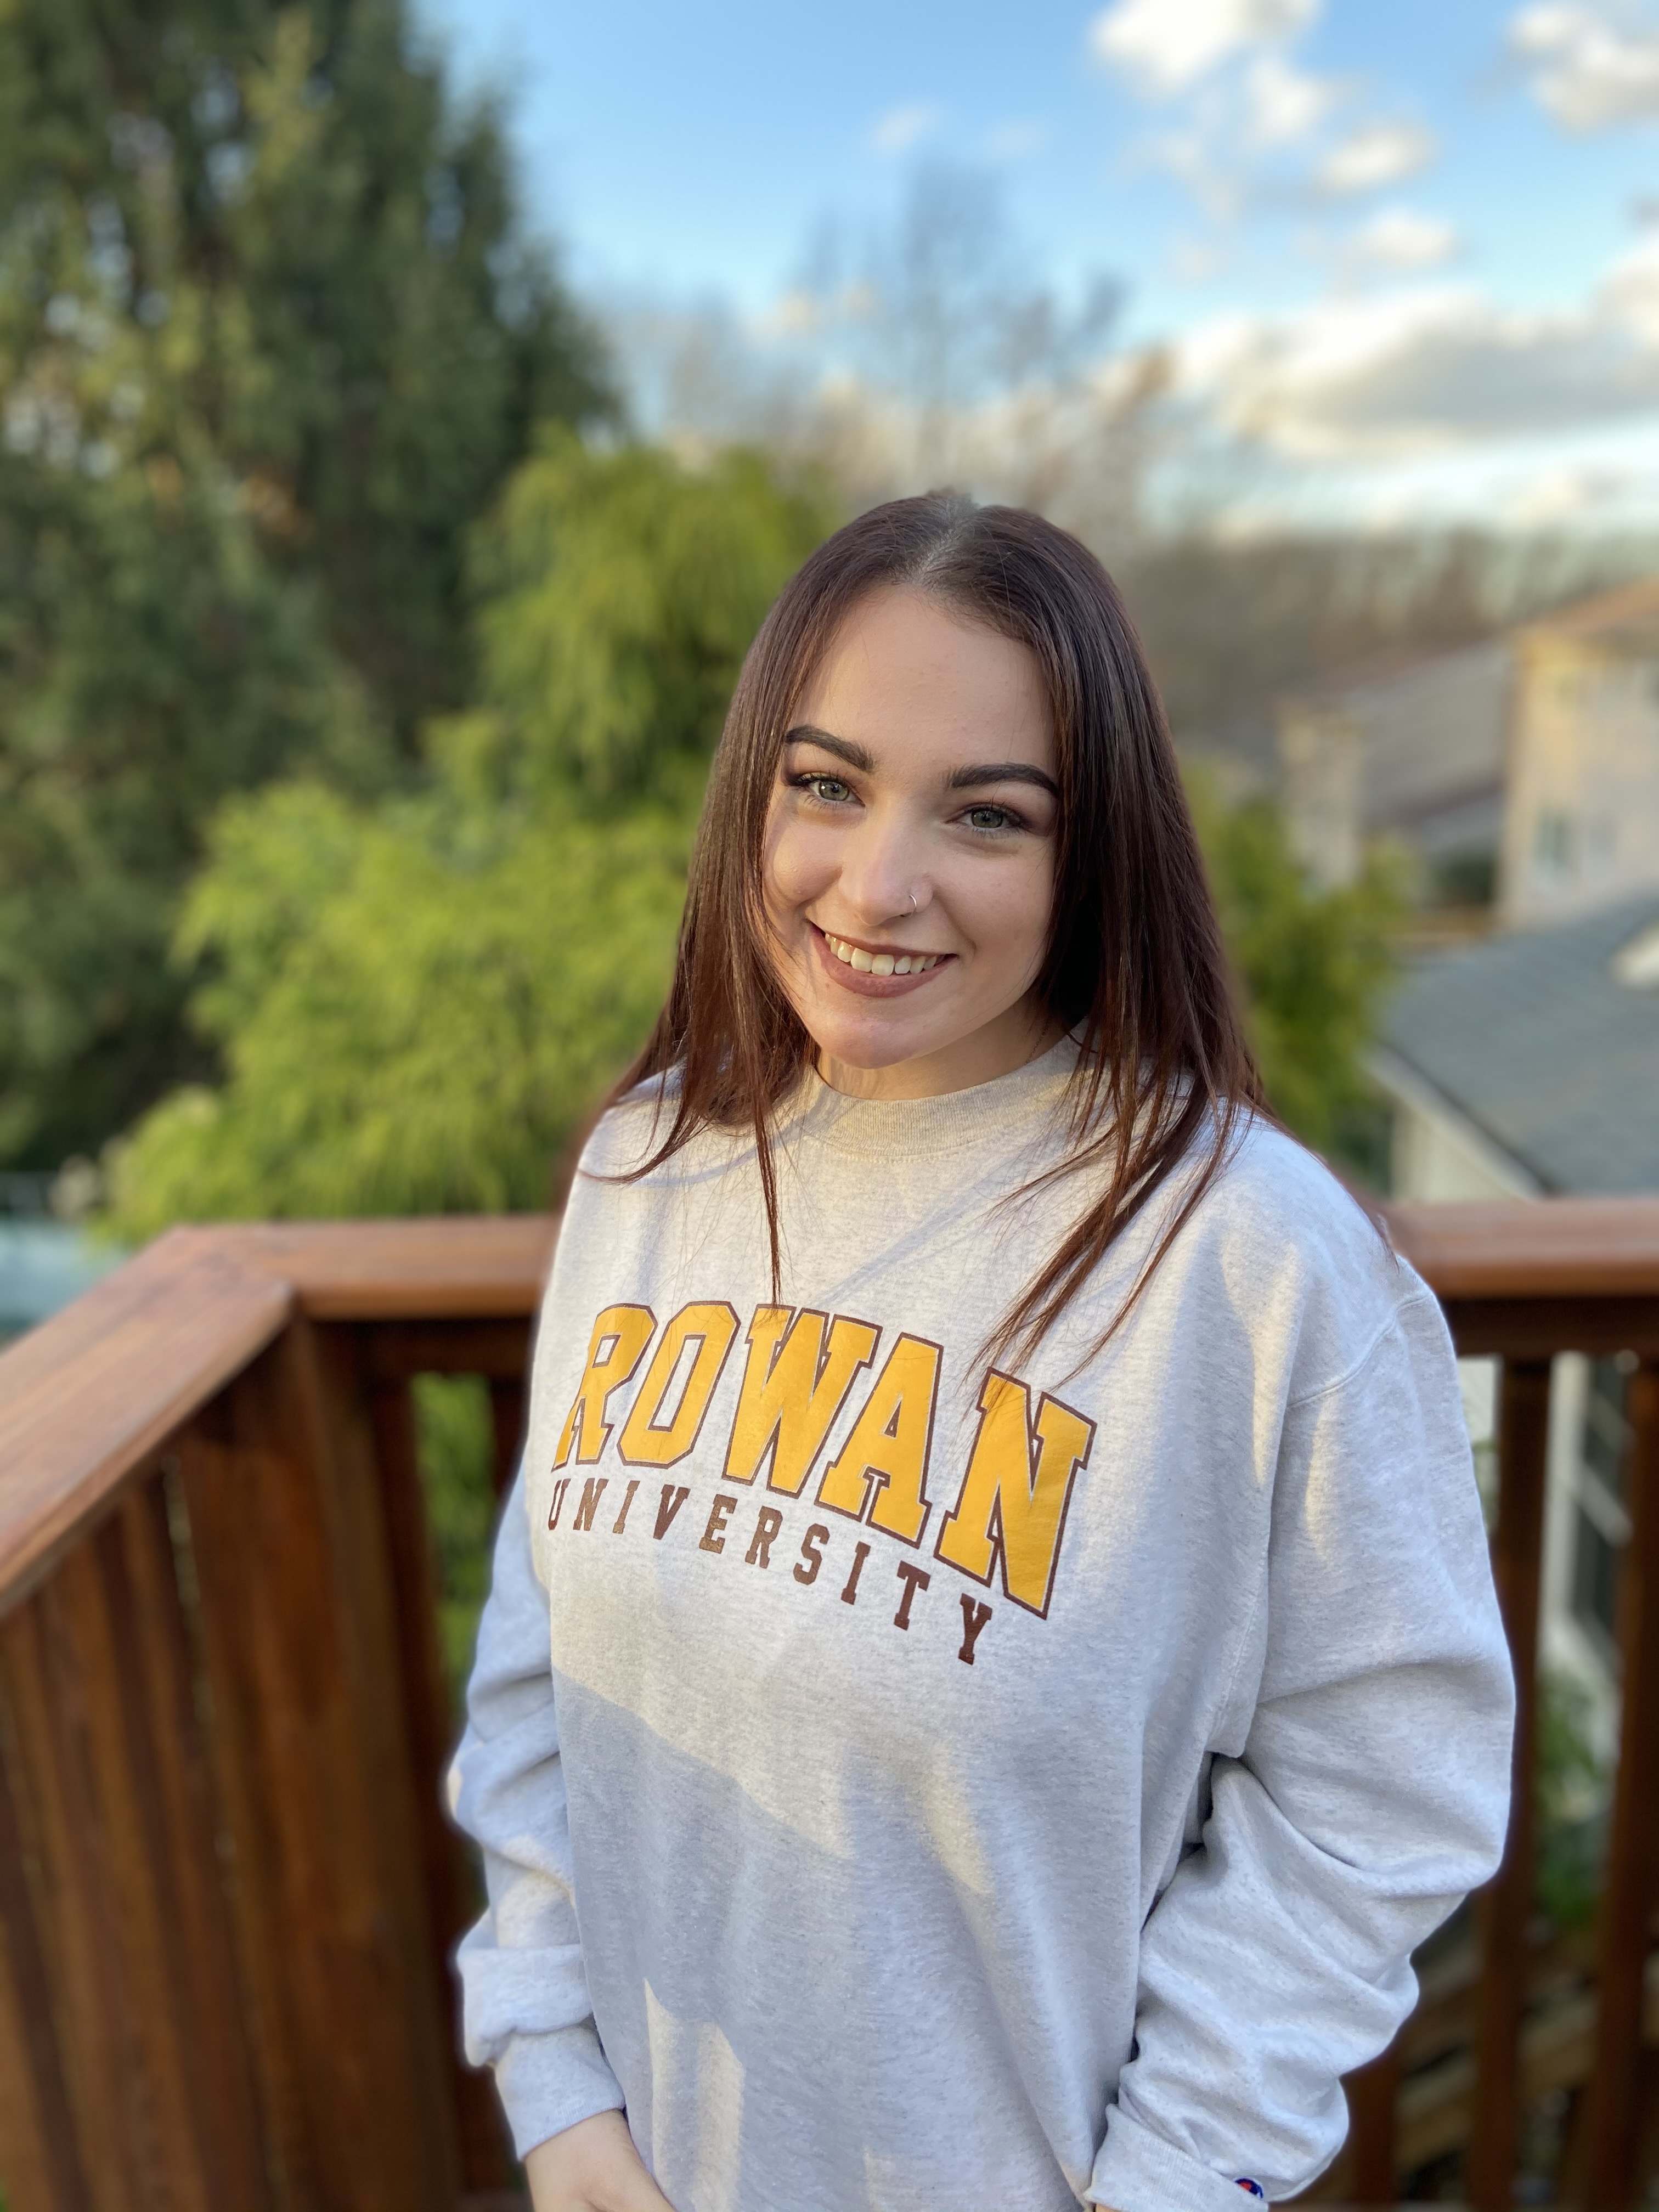 Jenna Bottiglieri poses outside for a portrait while wearing a Rowan University sweatshirt.